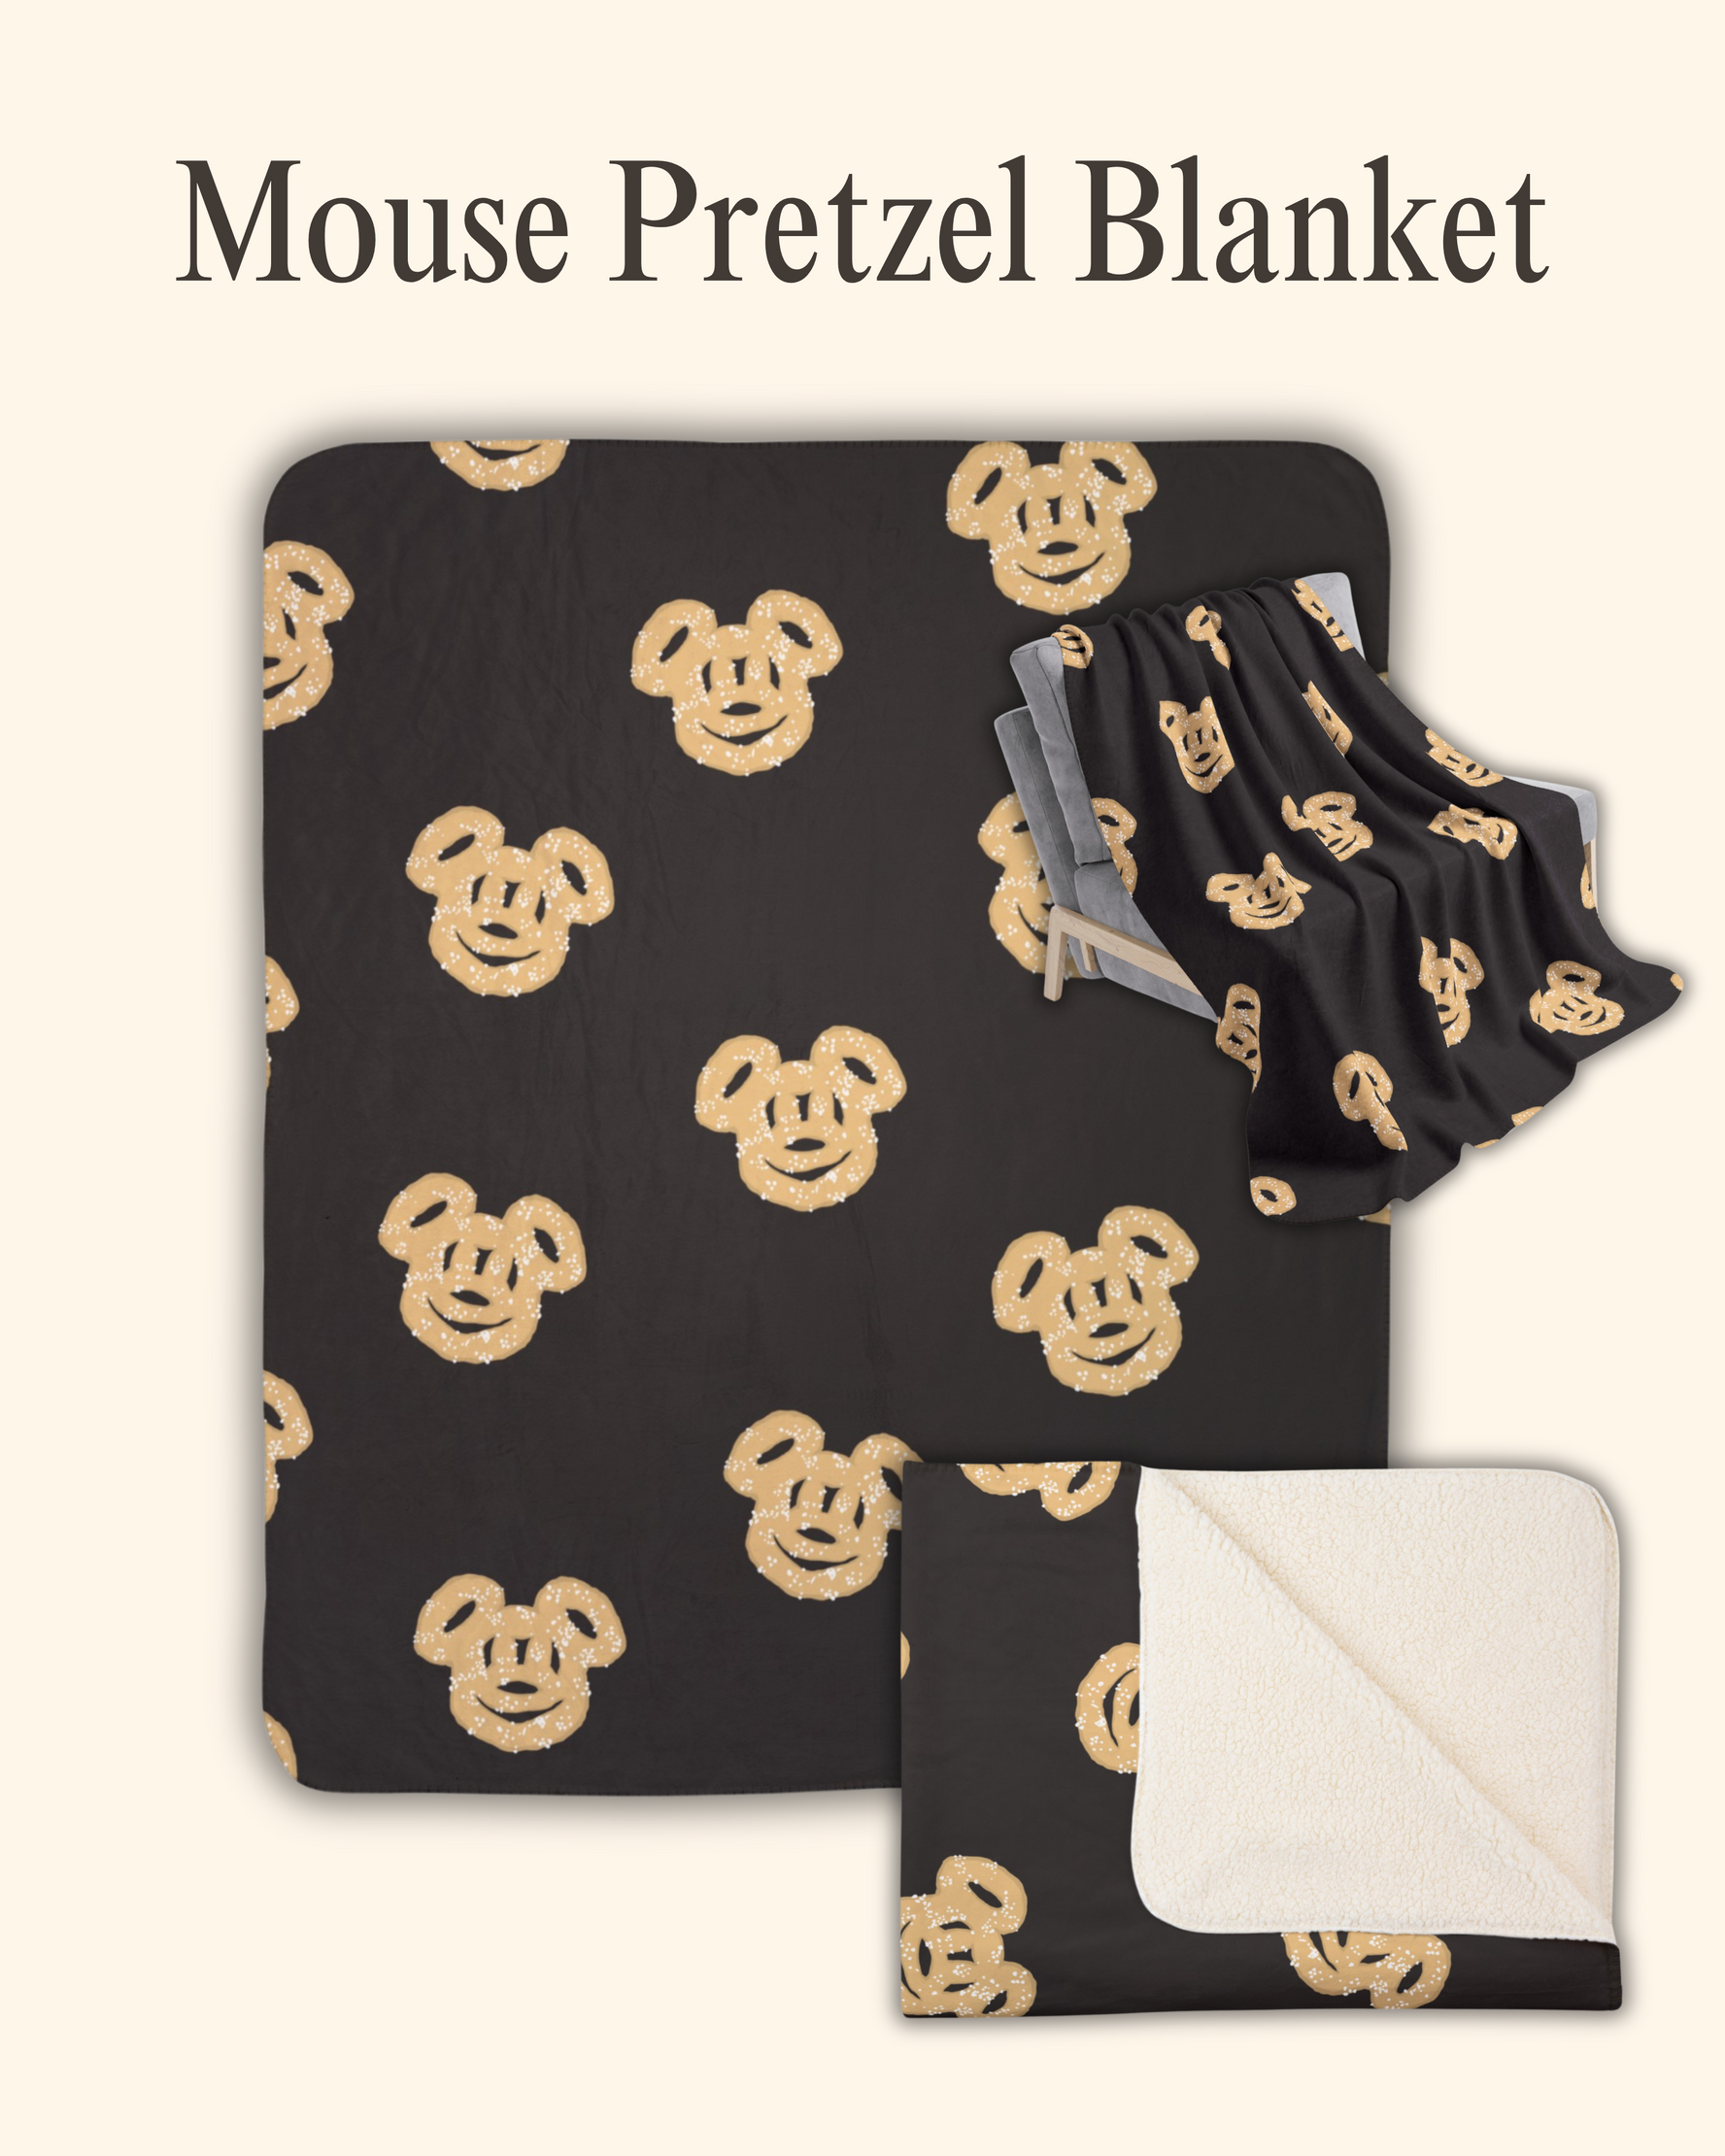 Mouse Pretzel Blanket